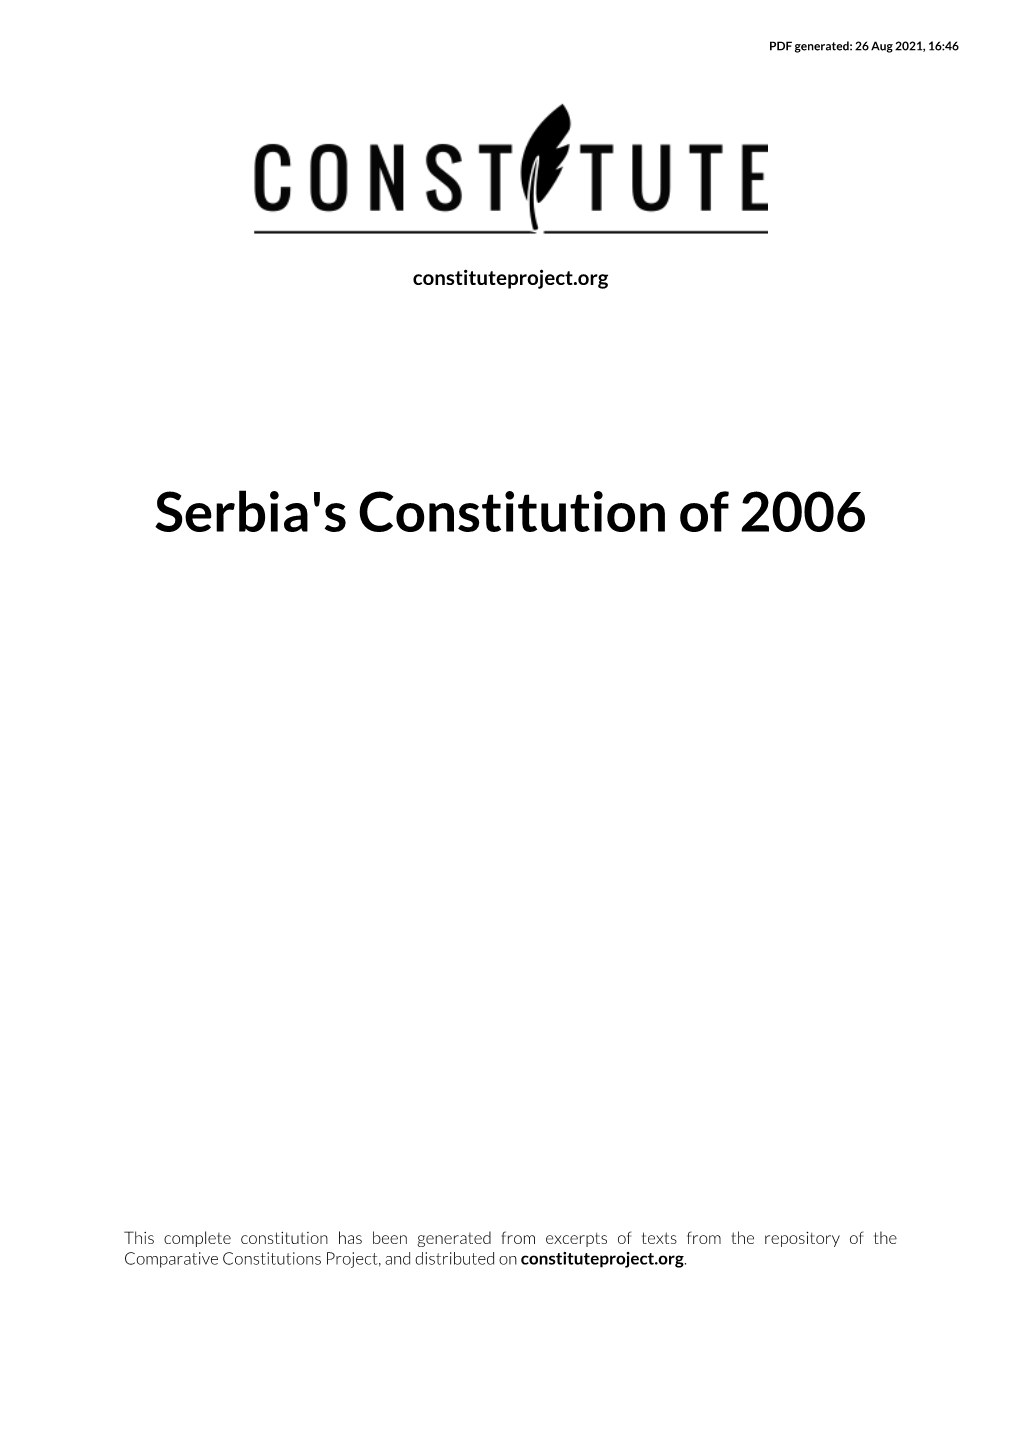 Serbia's Constitution of 2006